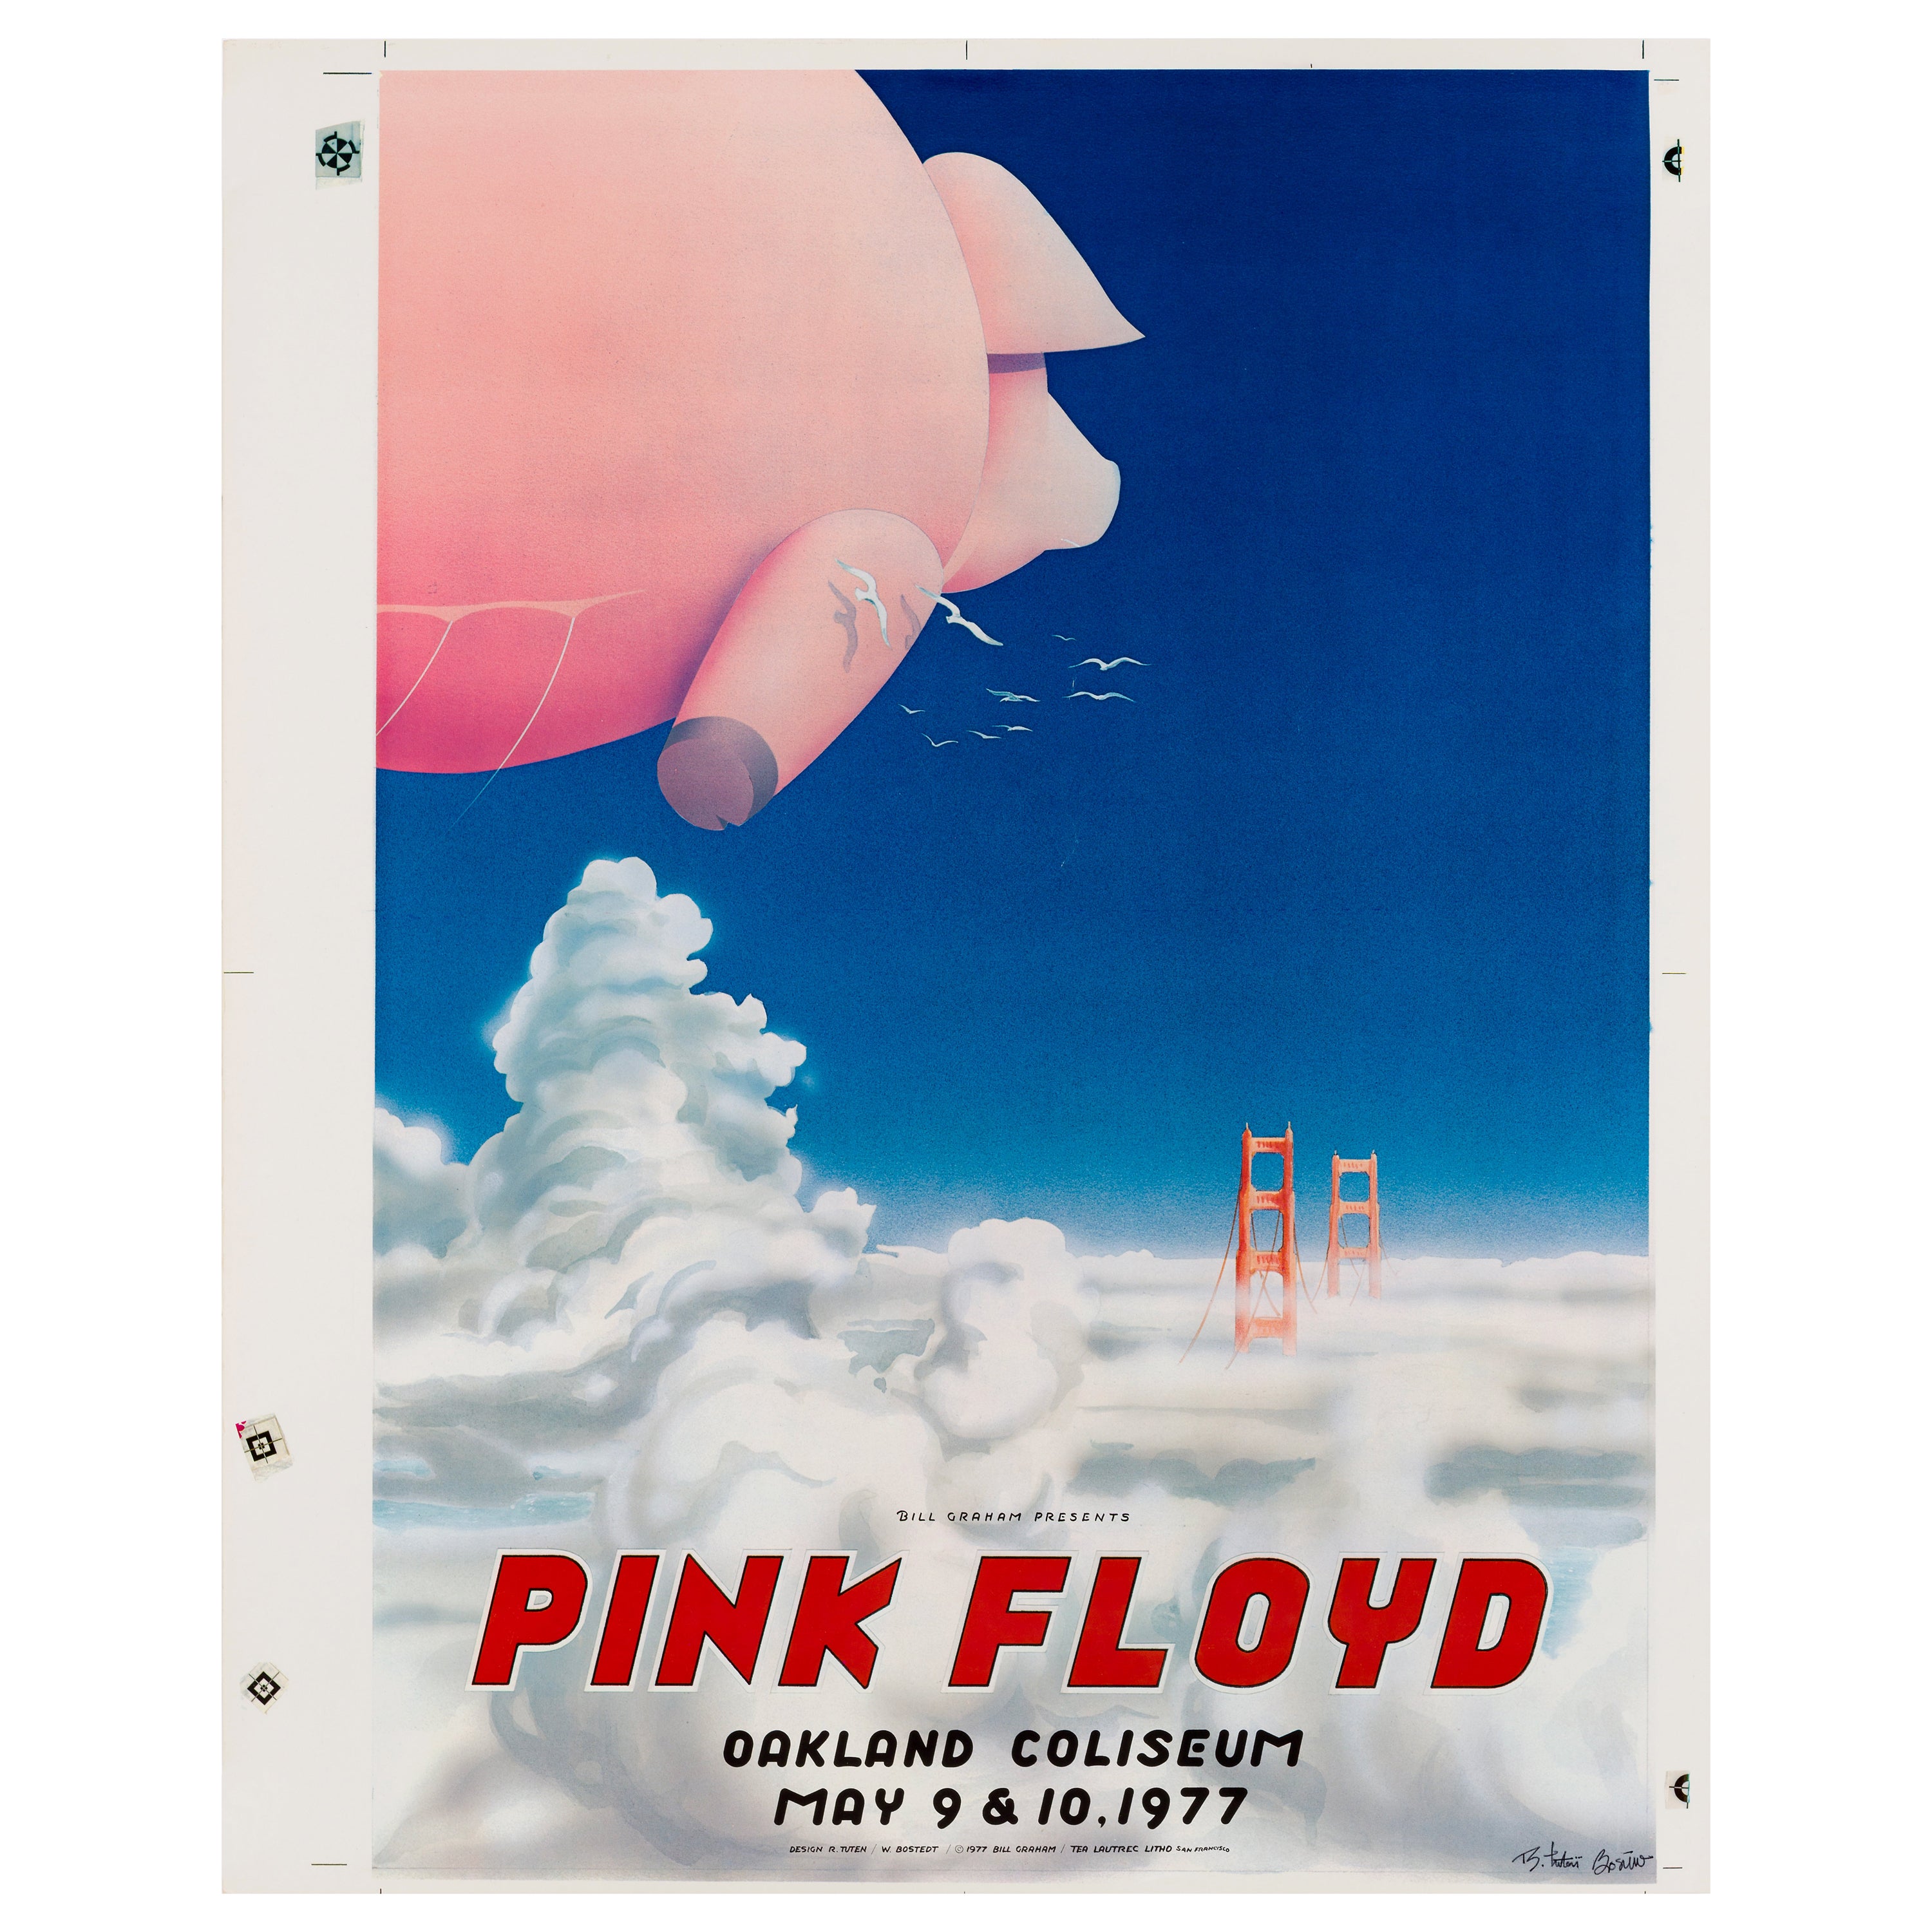 Pink Floyd Original Uncut Printer's Proof Concert Poster by Randy Tuten, 1977